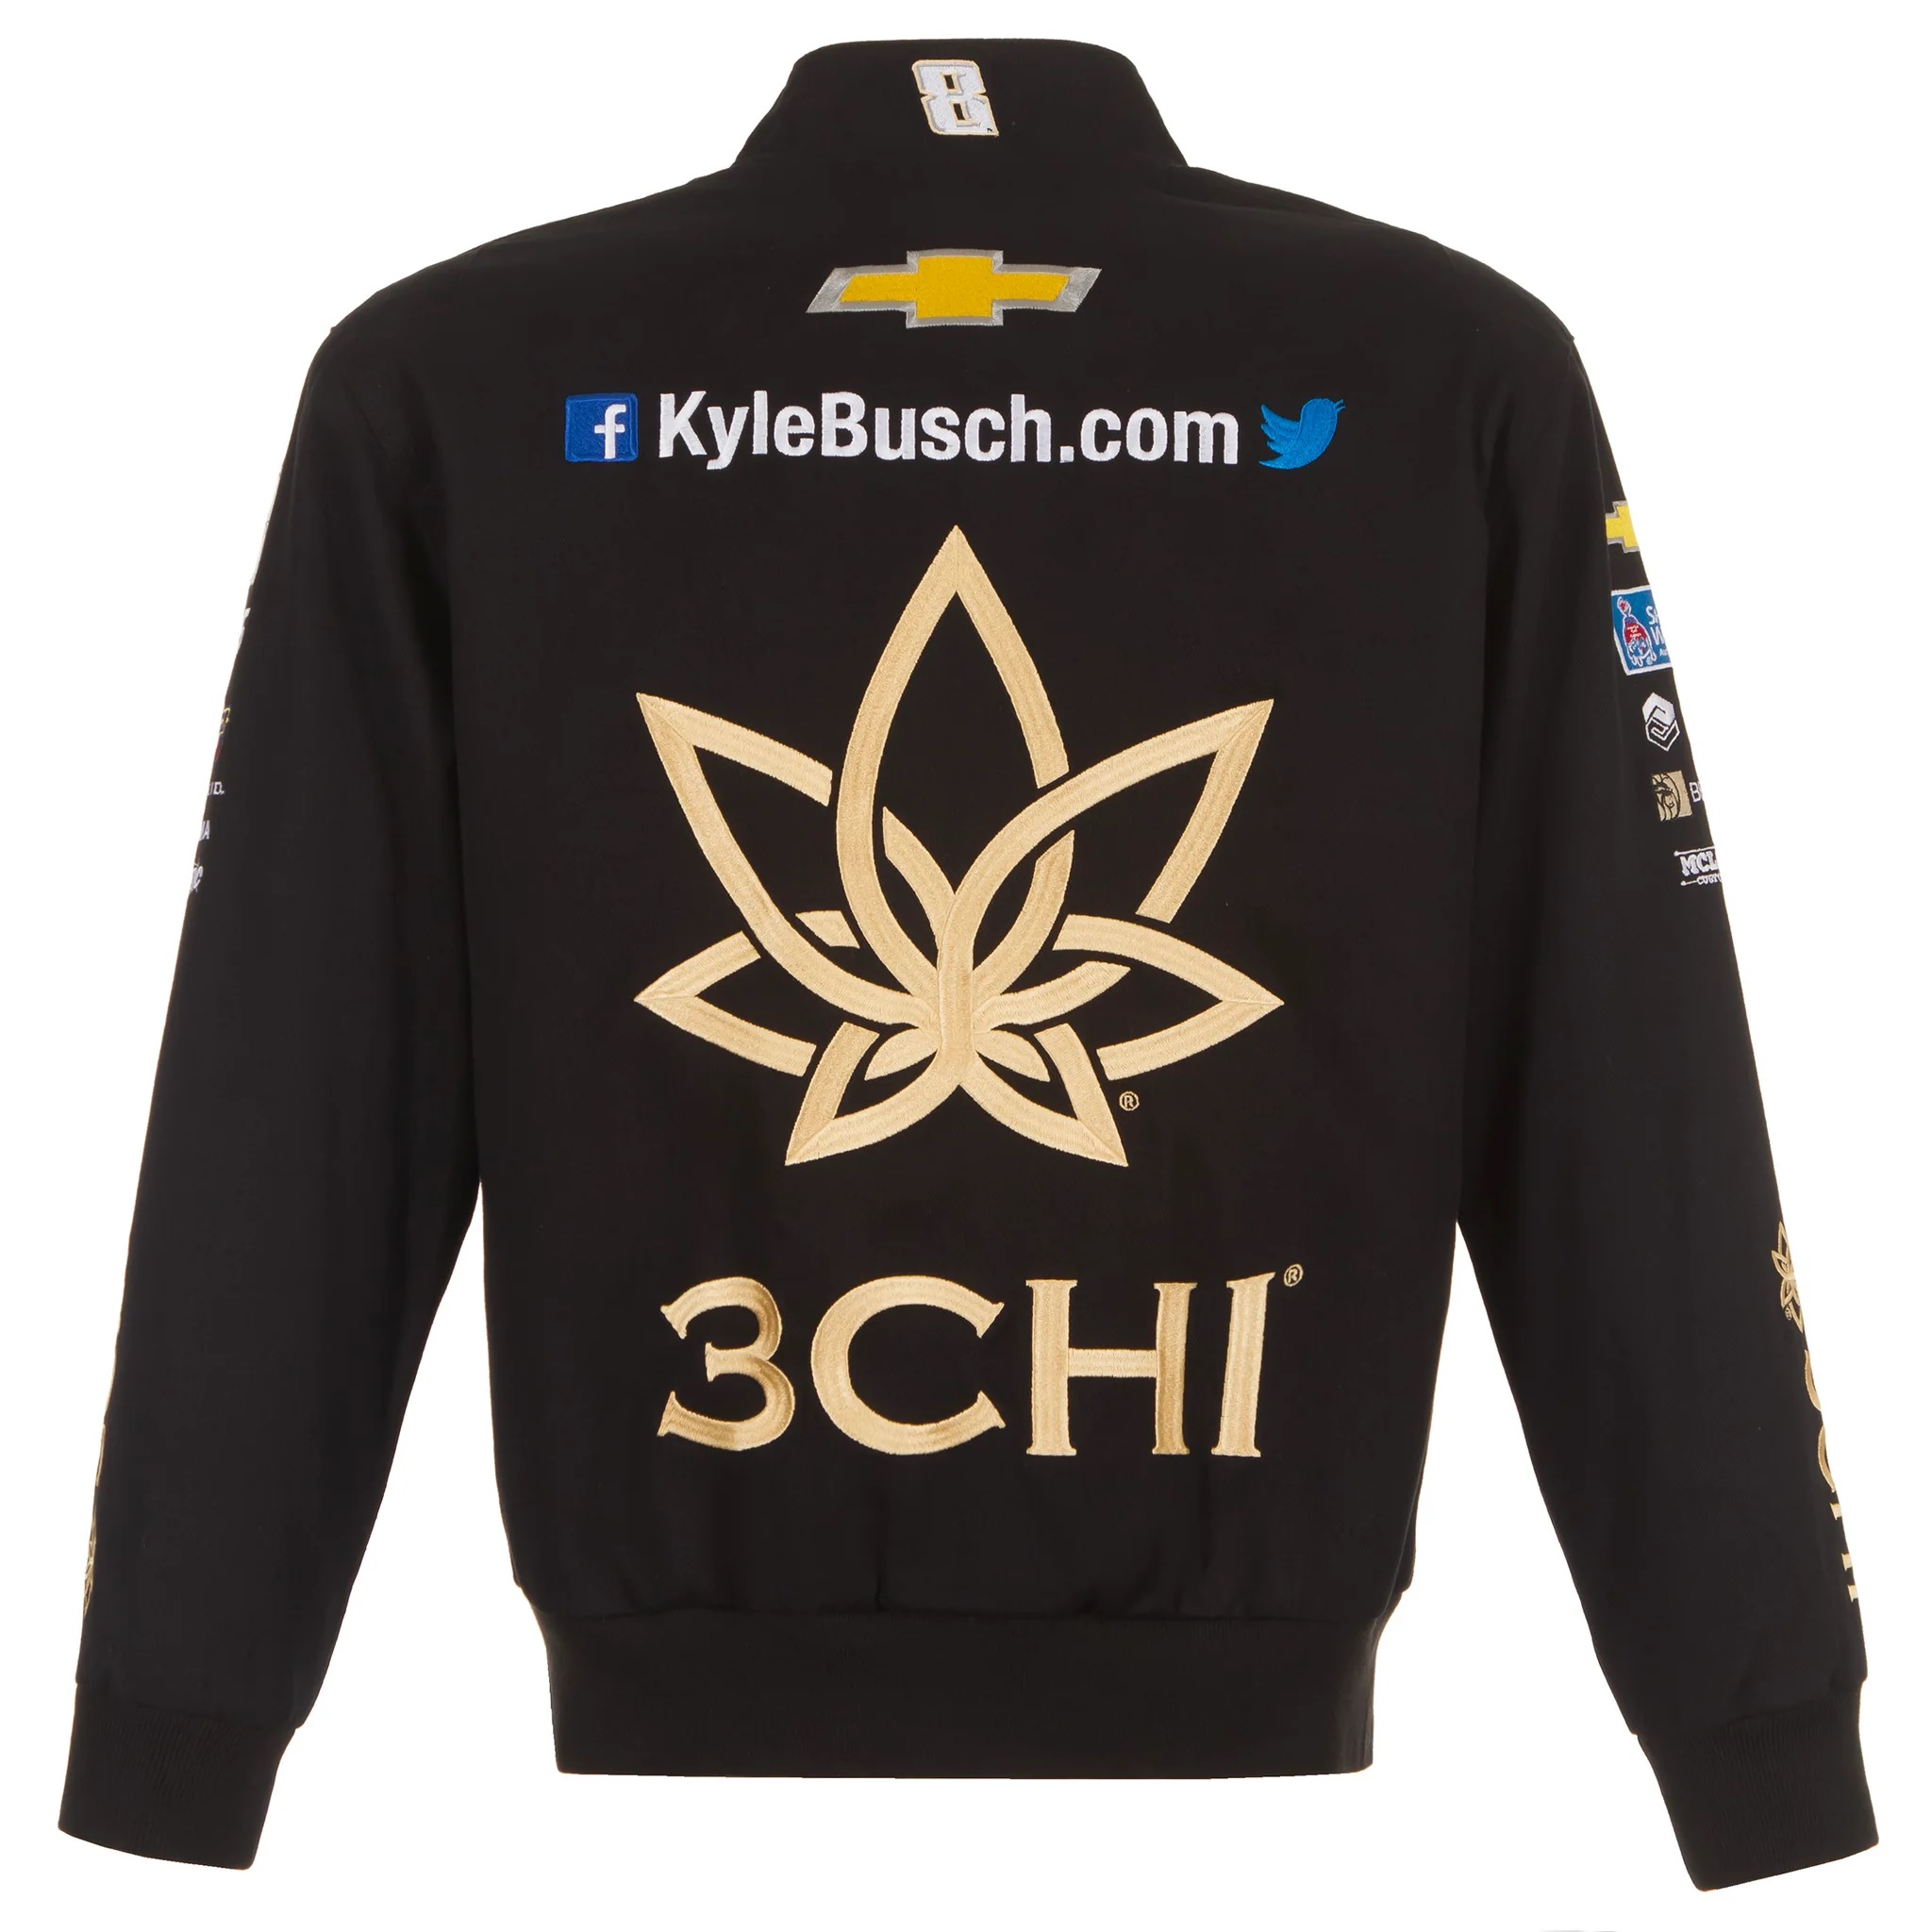 Nascar Kyle Busch 3Chi Cotton Twill Full Snap Jacket